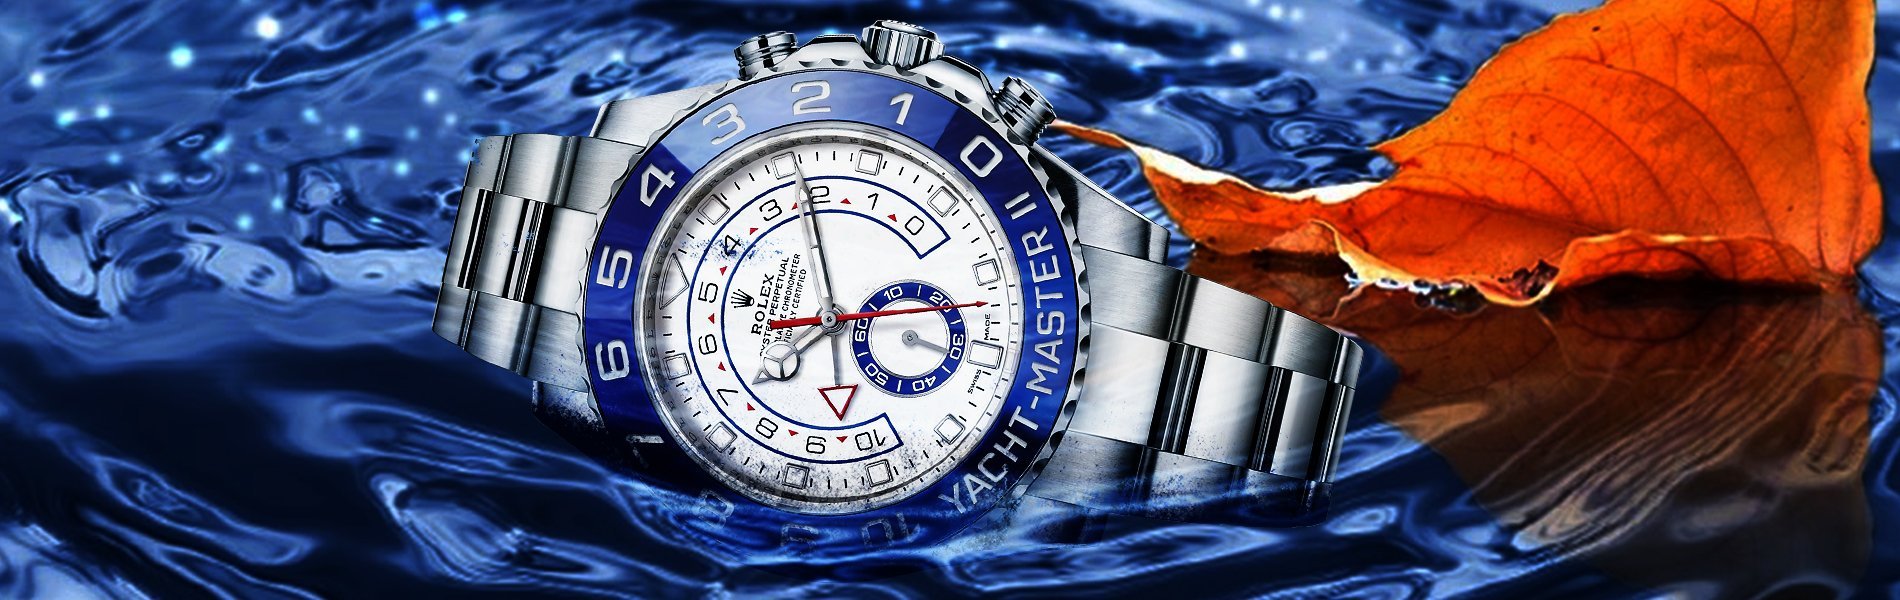 Rolex White Gold Yacht-Master 42 Watch - Black Dial - Oysterflex Strap - 226659 BK